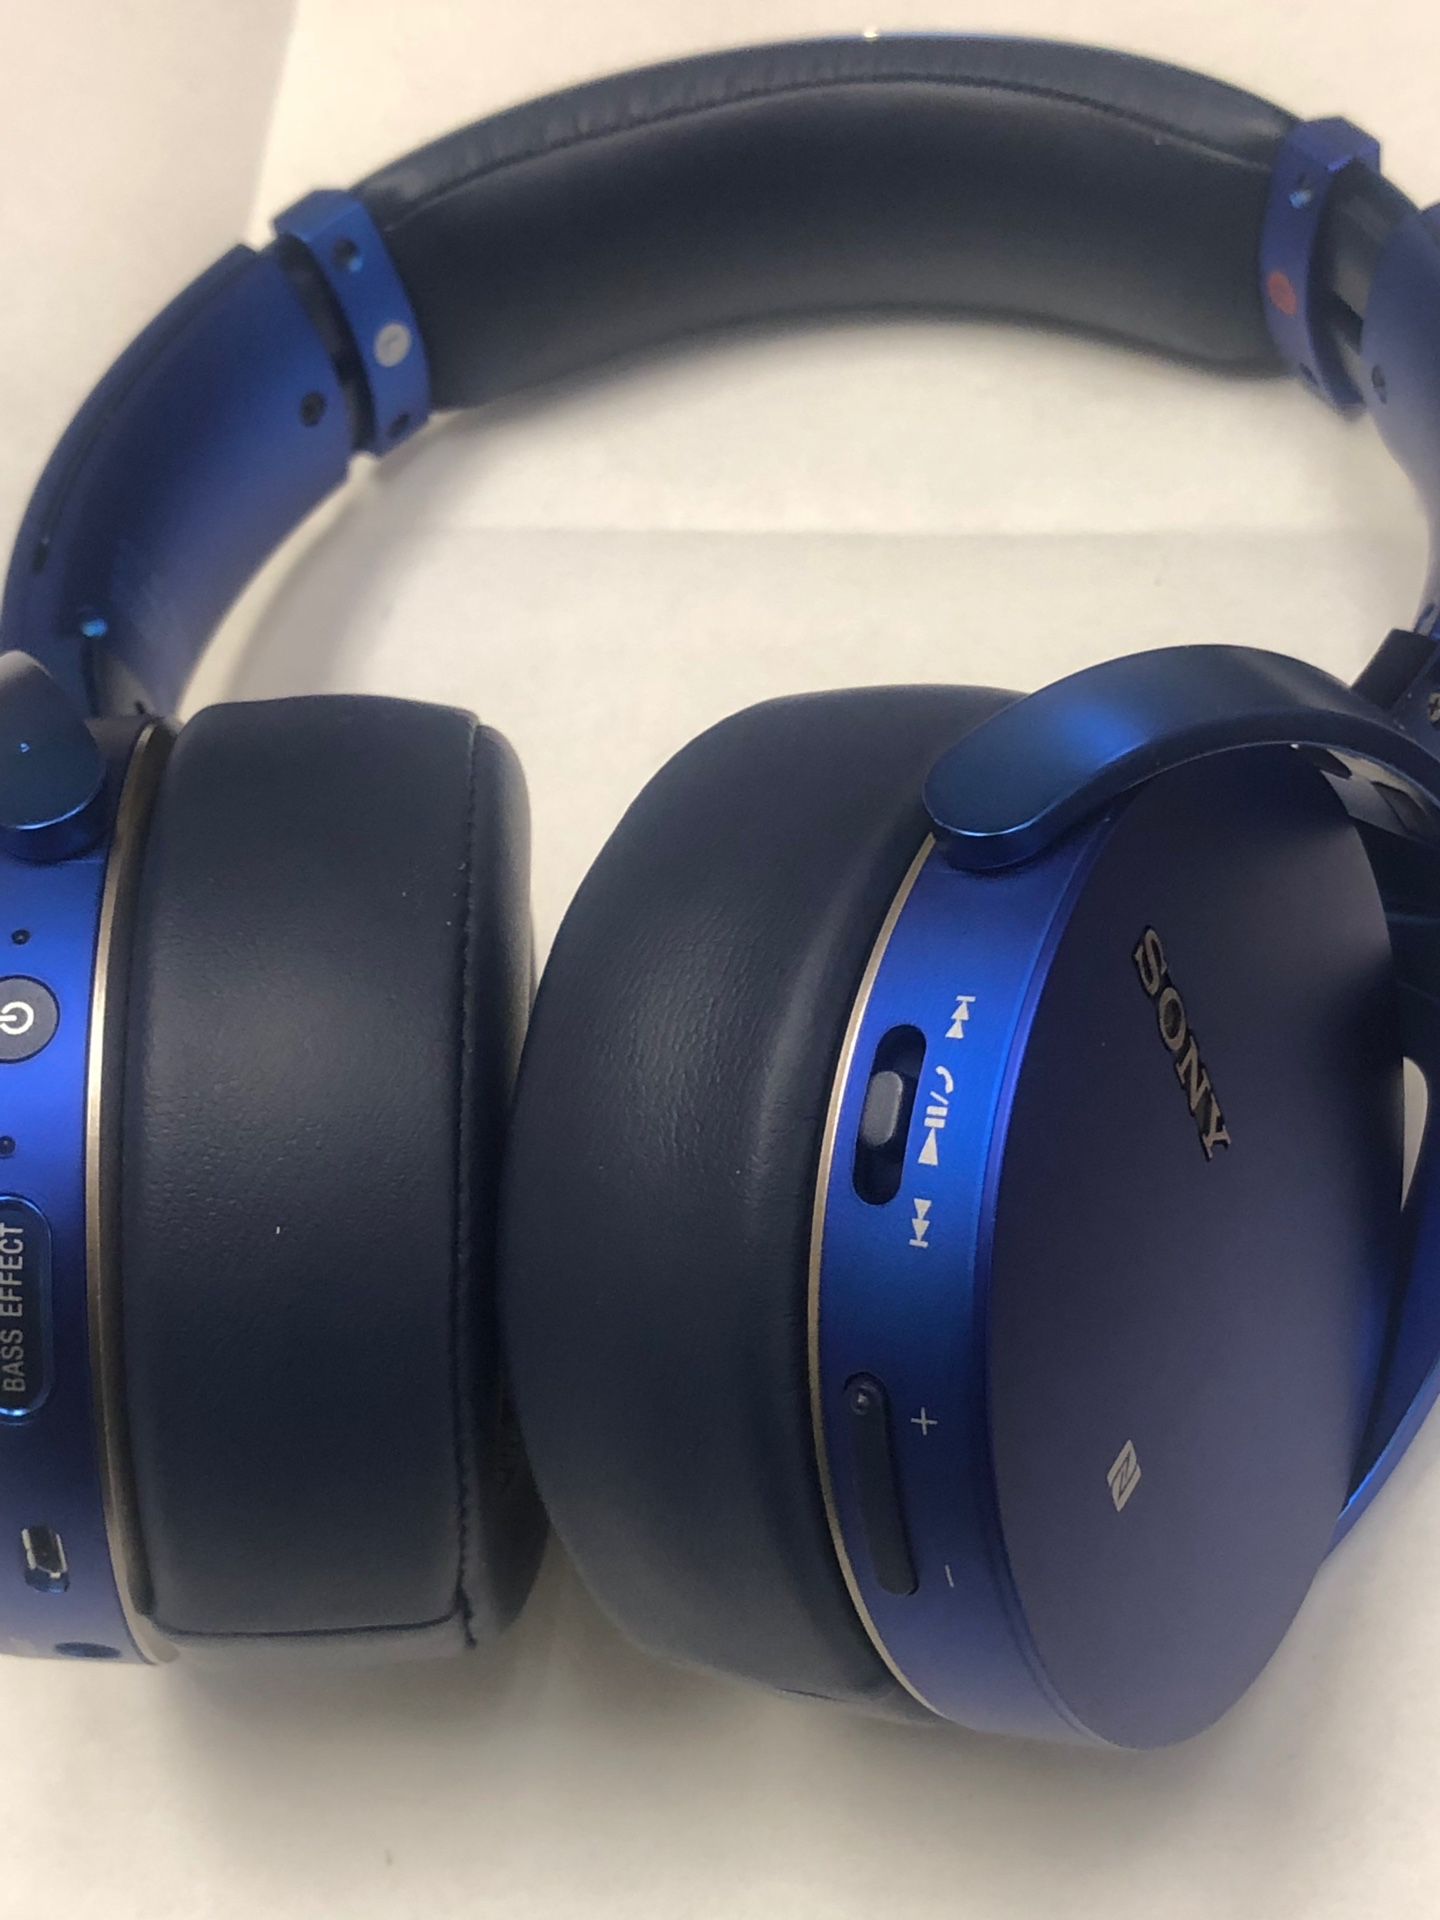 Sony pro studio headphones wireless noise canceling Bluetooth or wired heavy bass boost effect beats dre